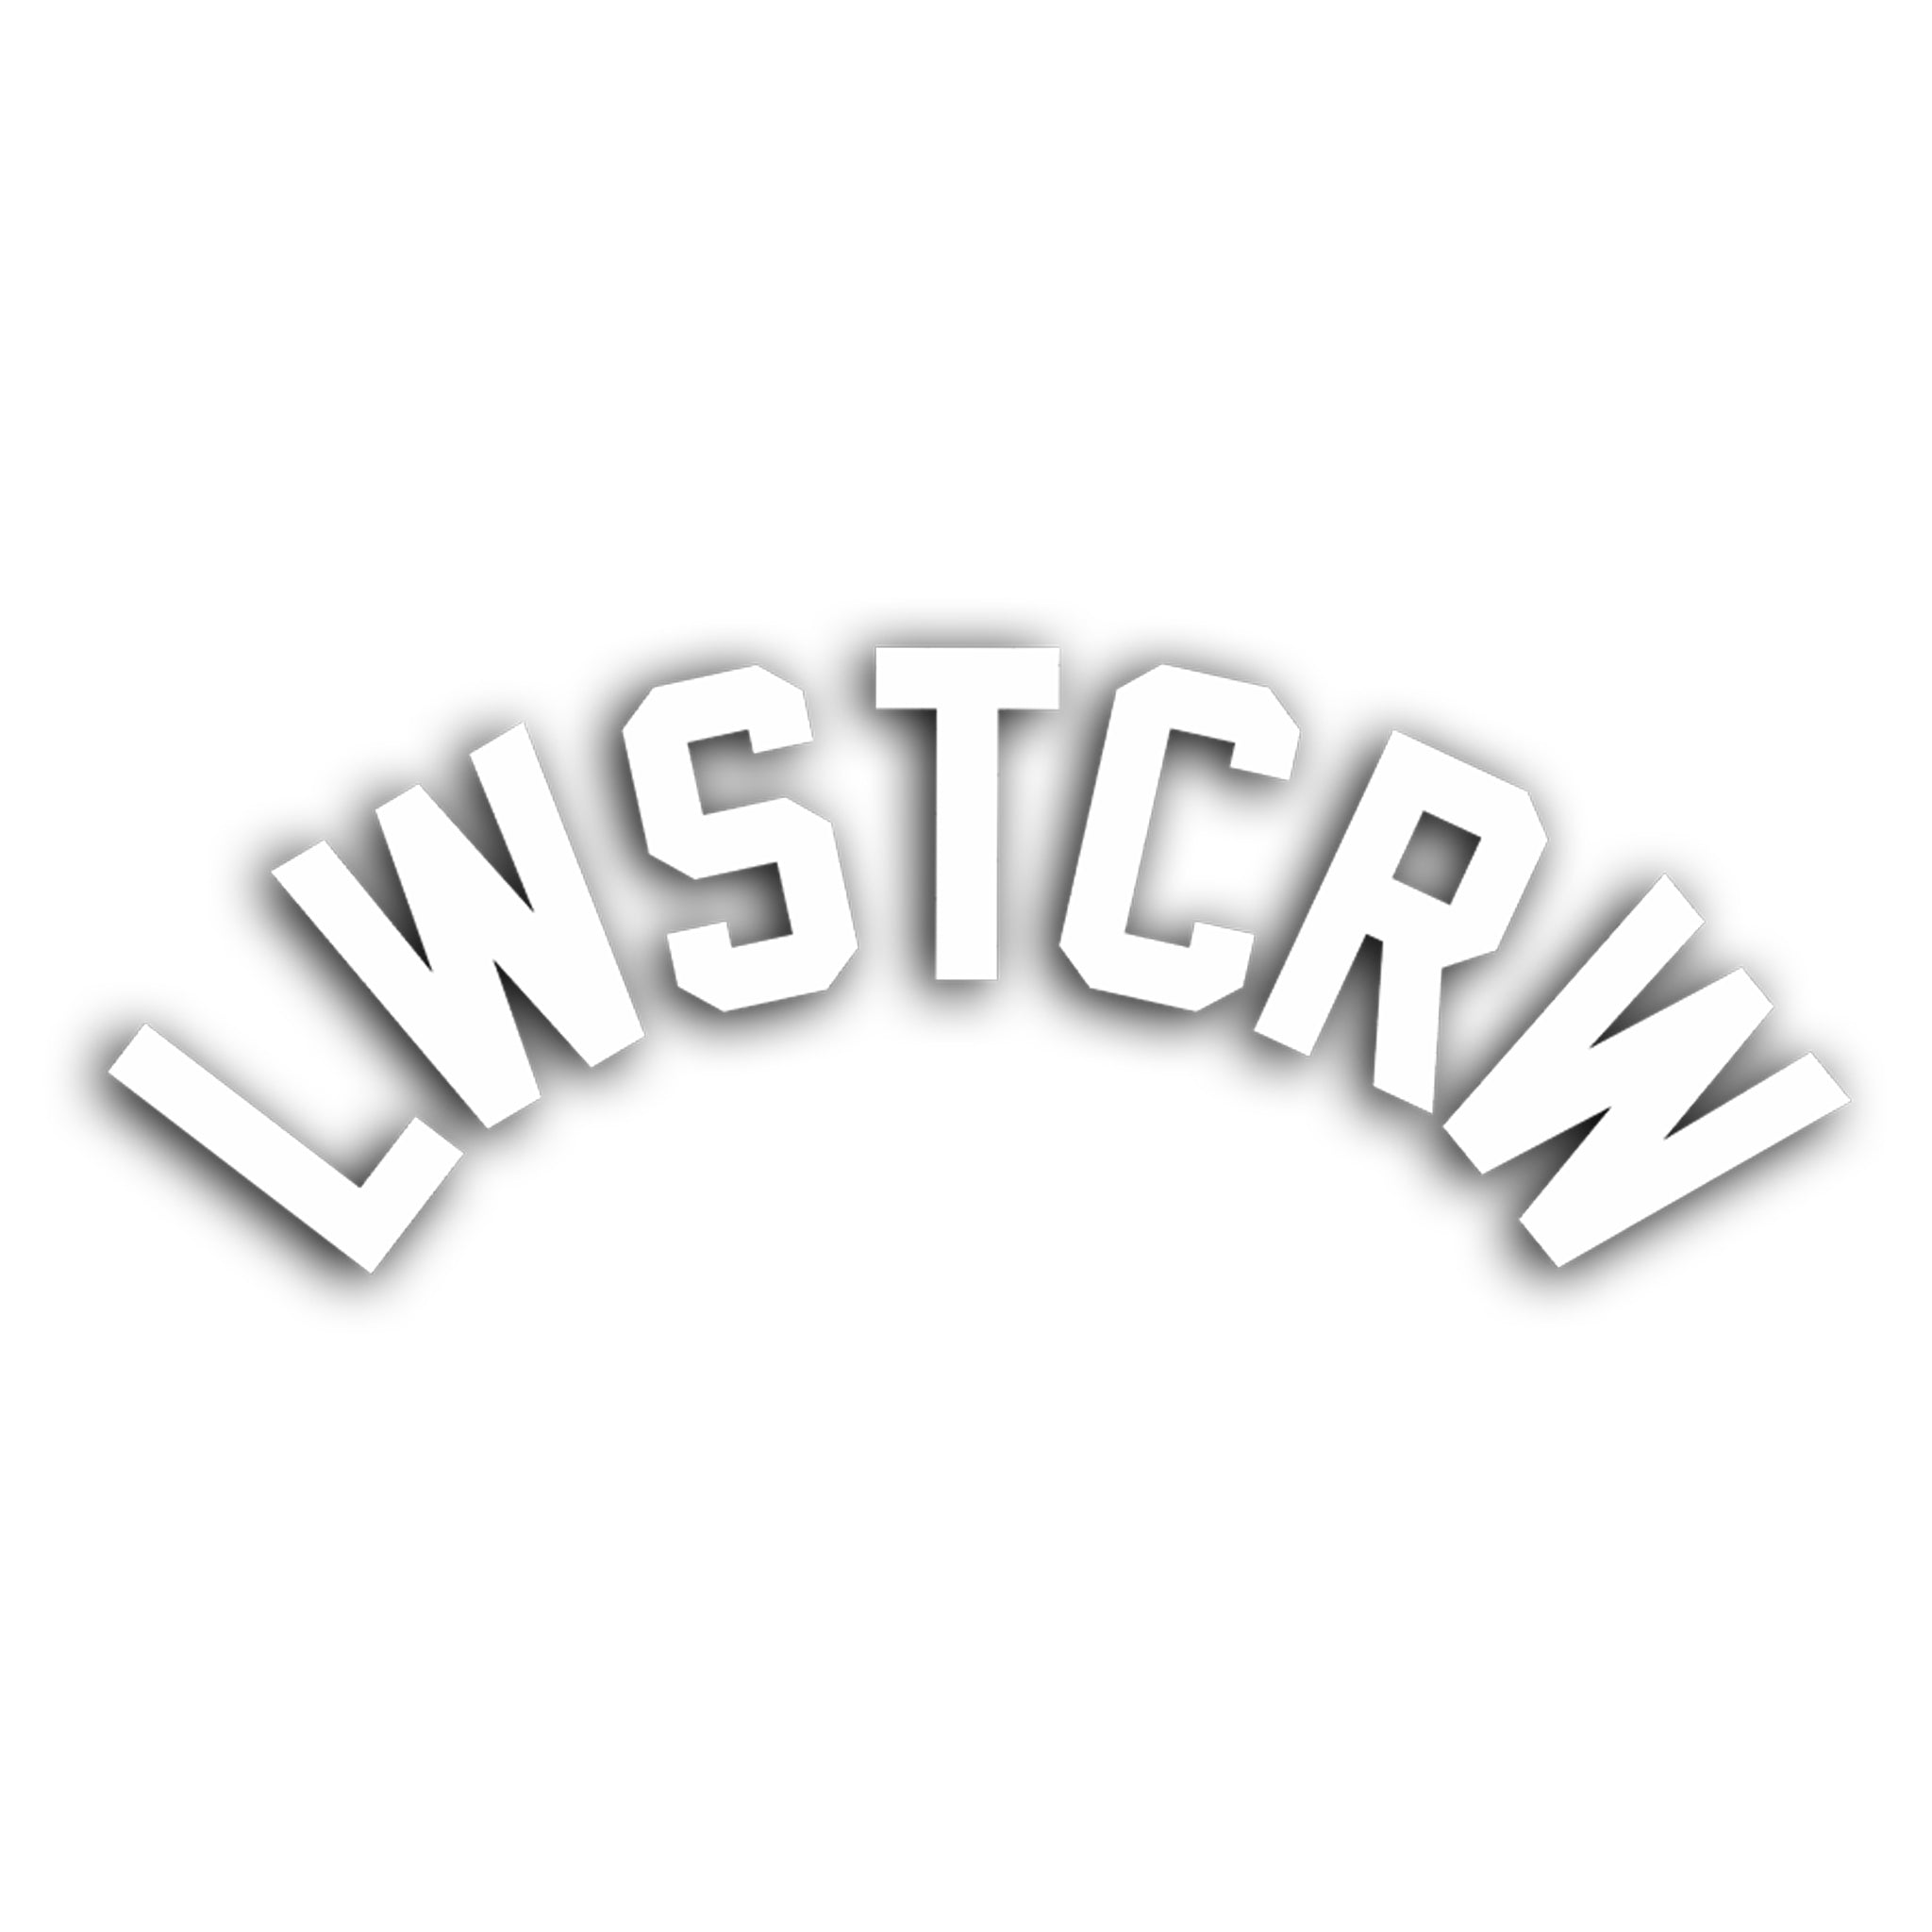 LWSTCRW™ Sticker "CURVED"